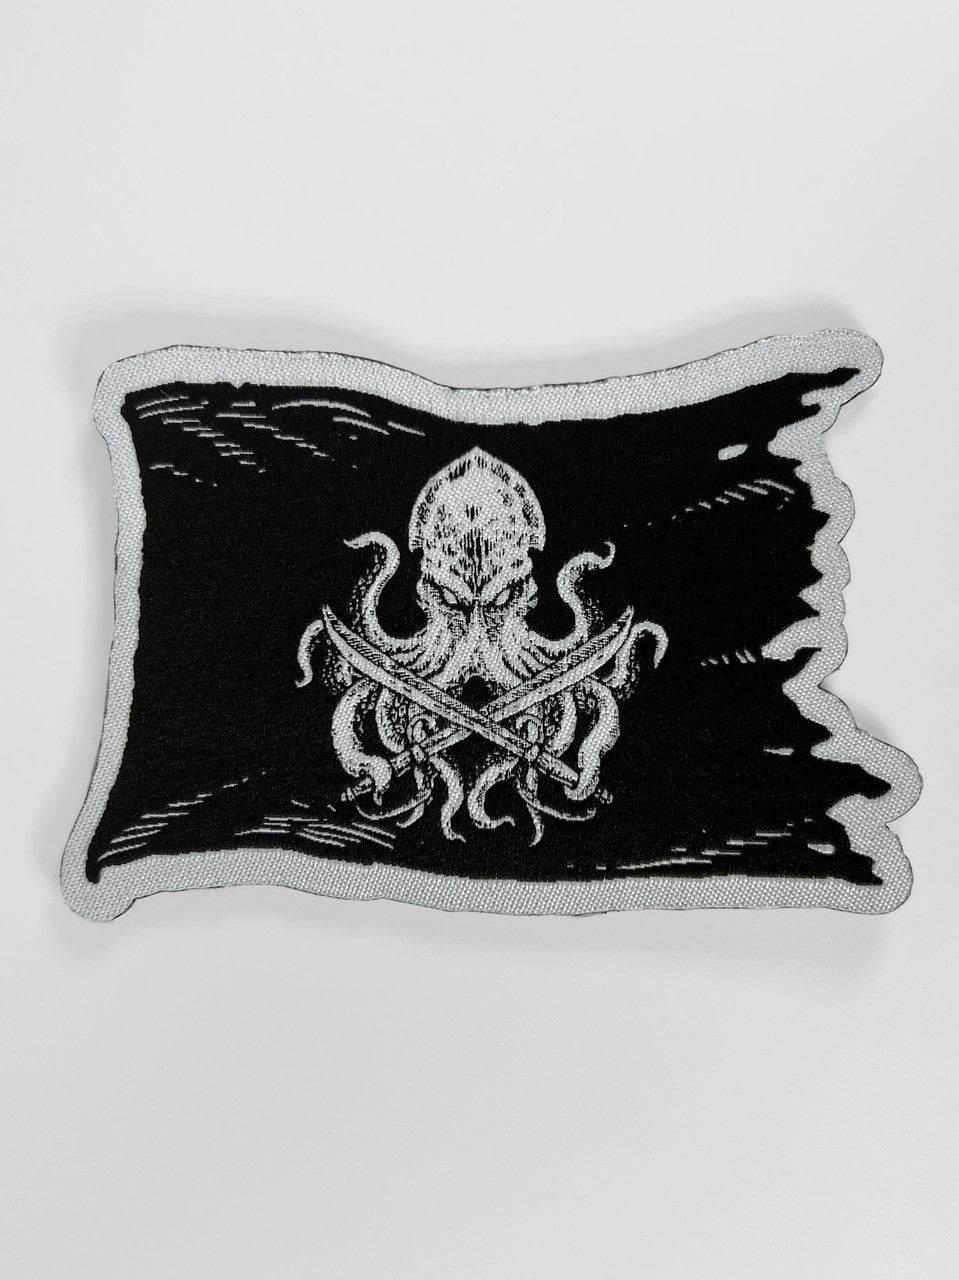 Kraken Flag Fabric Patch w/Velcro Backing